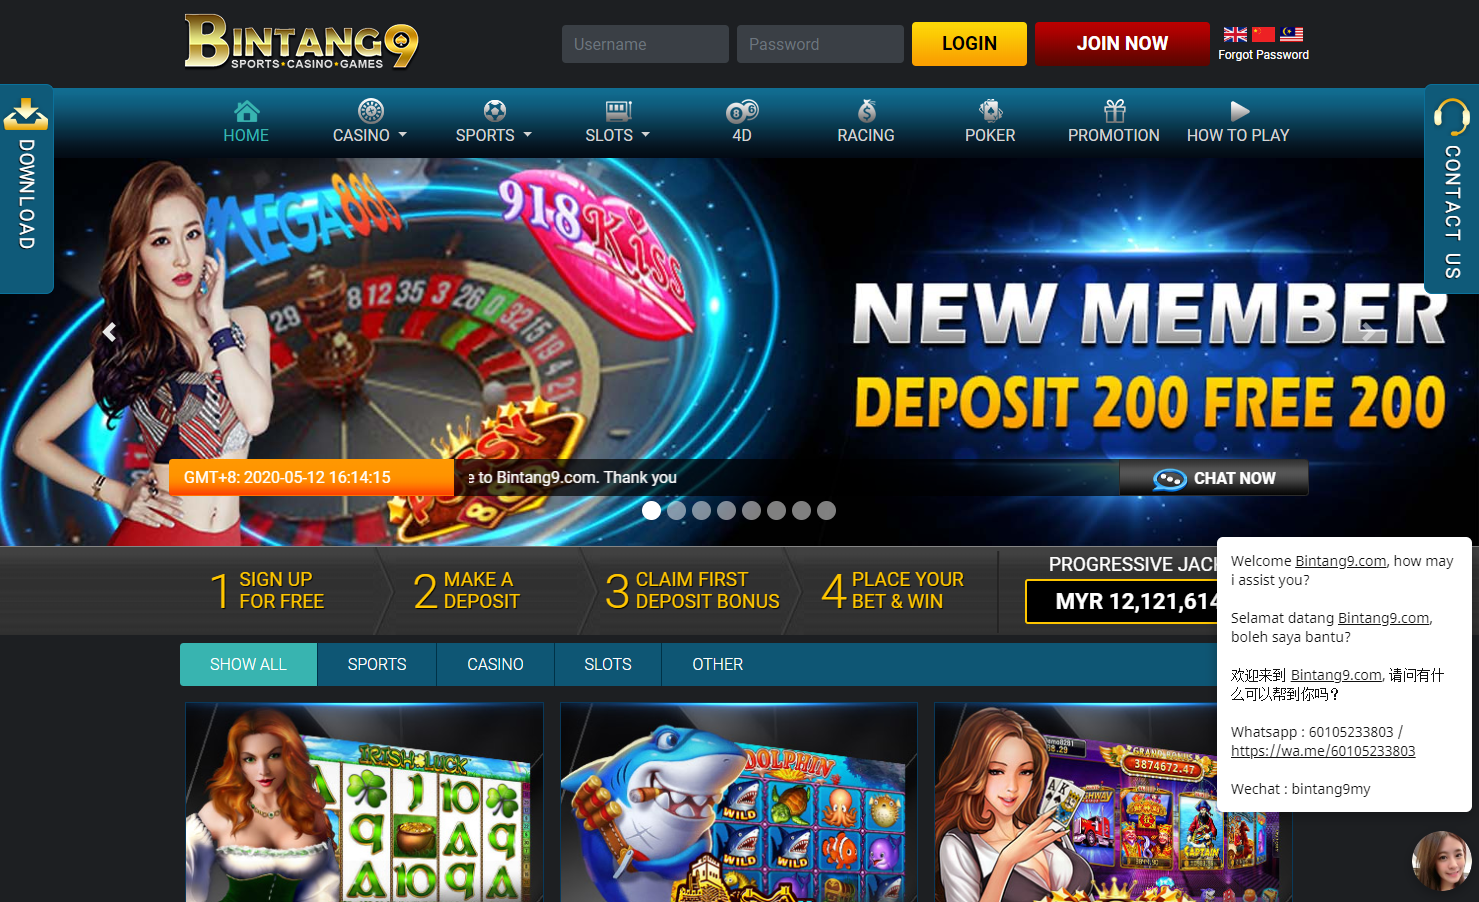 bintang9 online casino